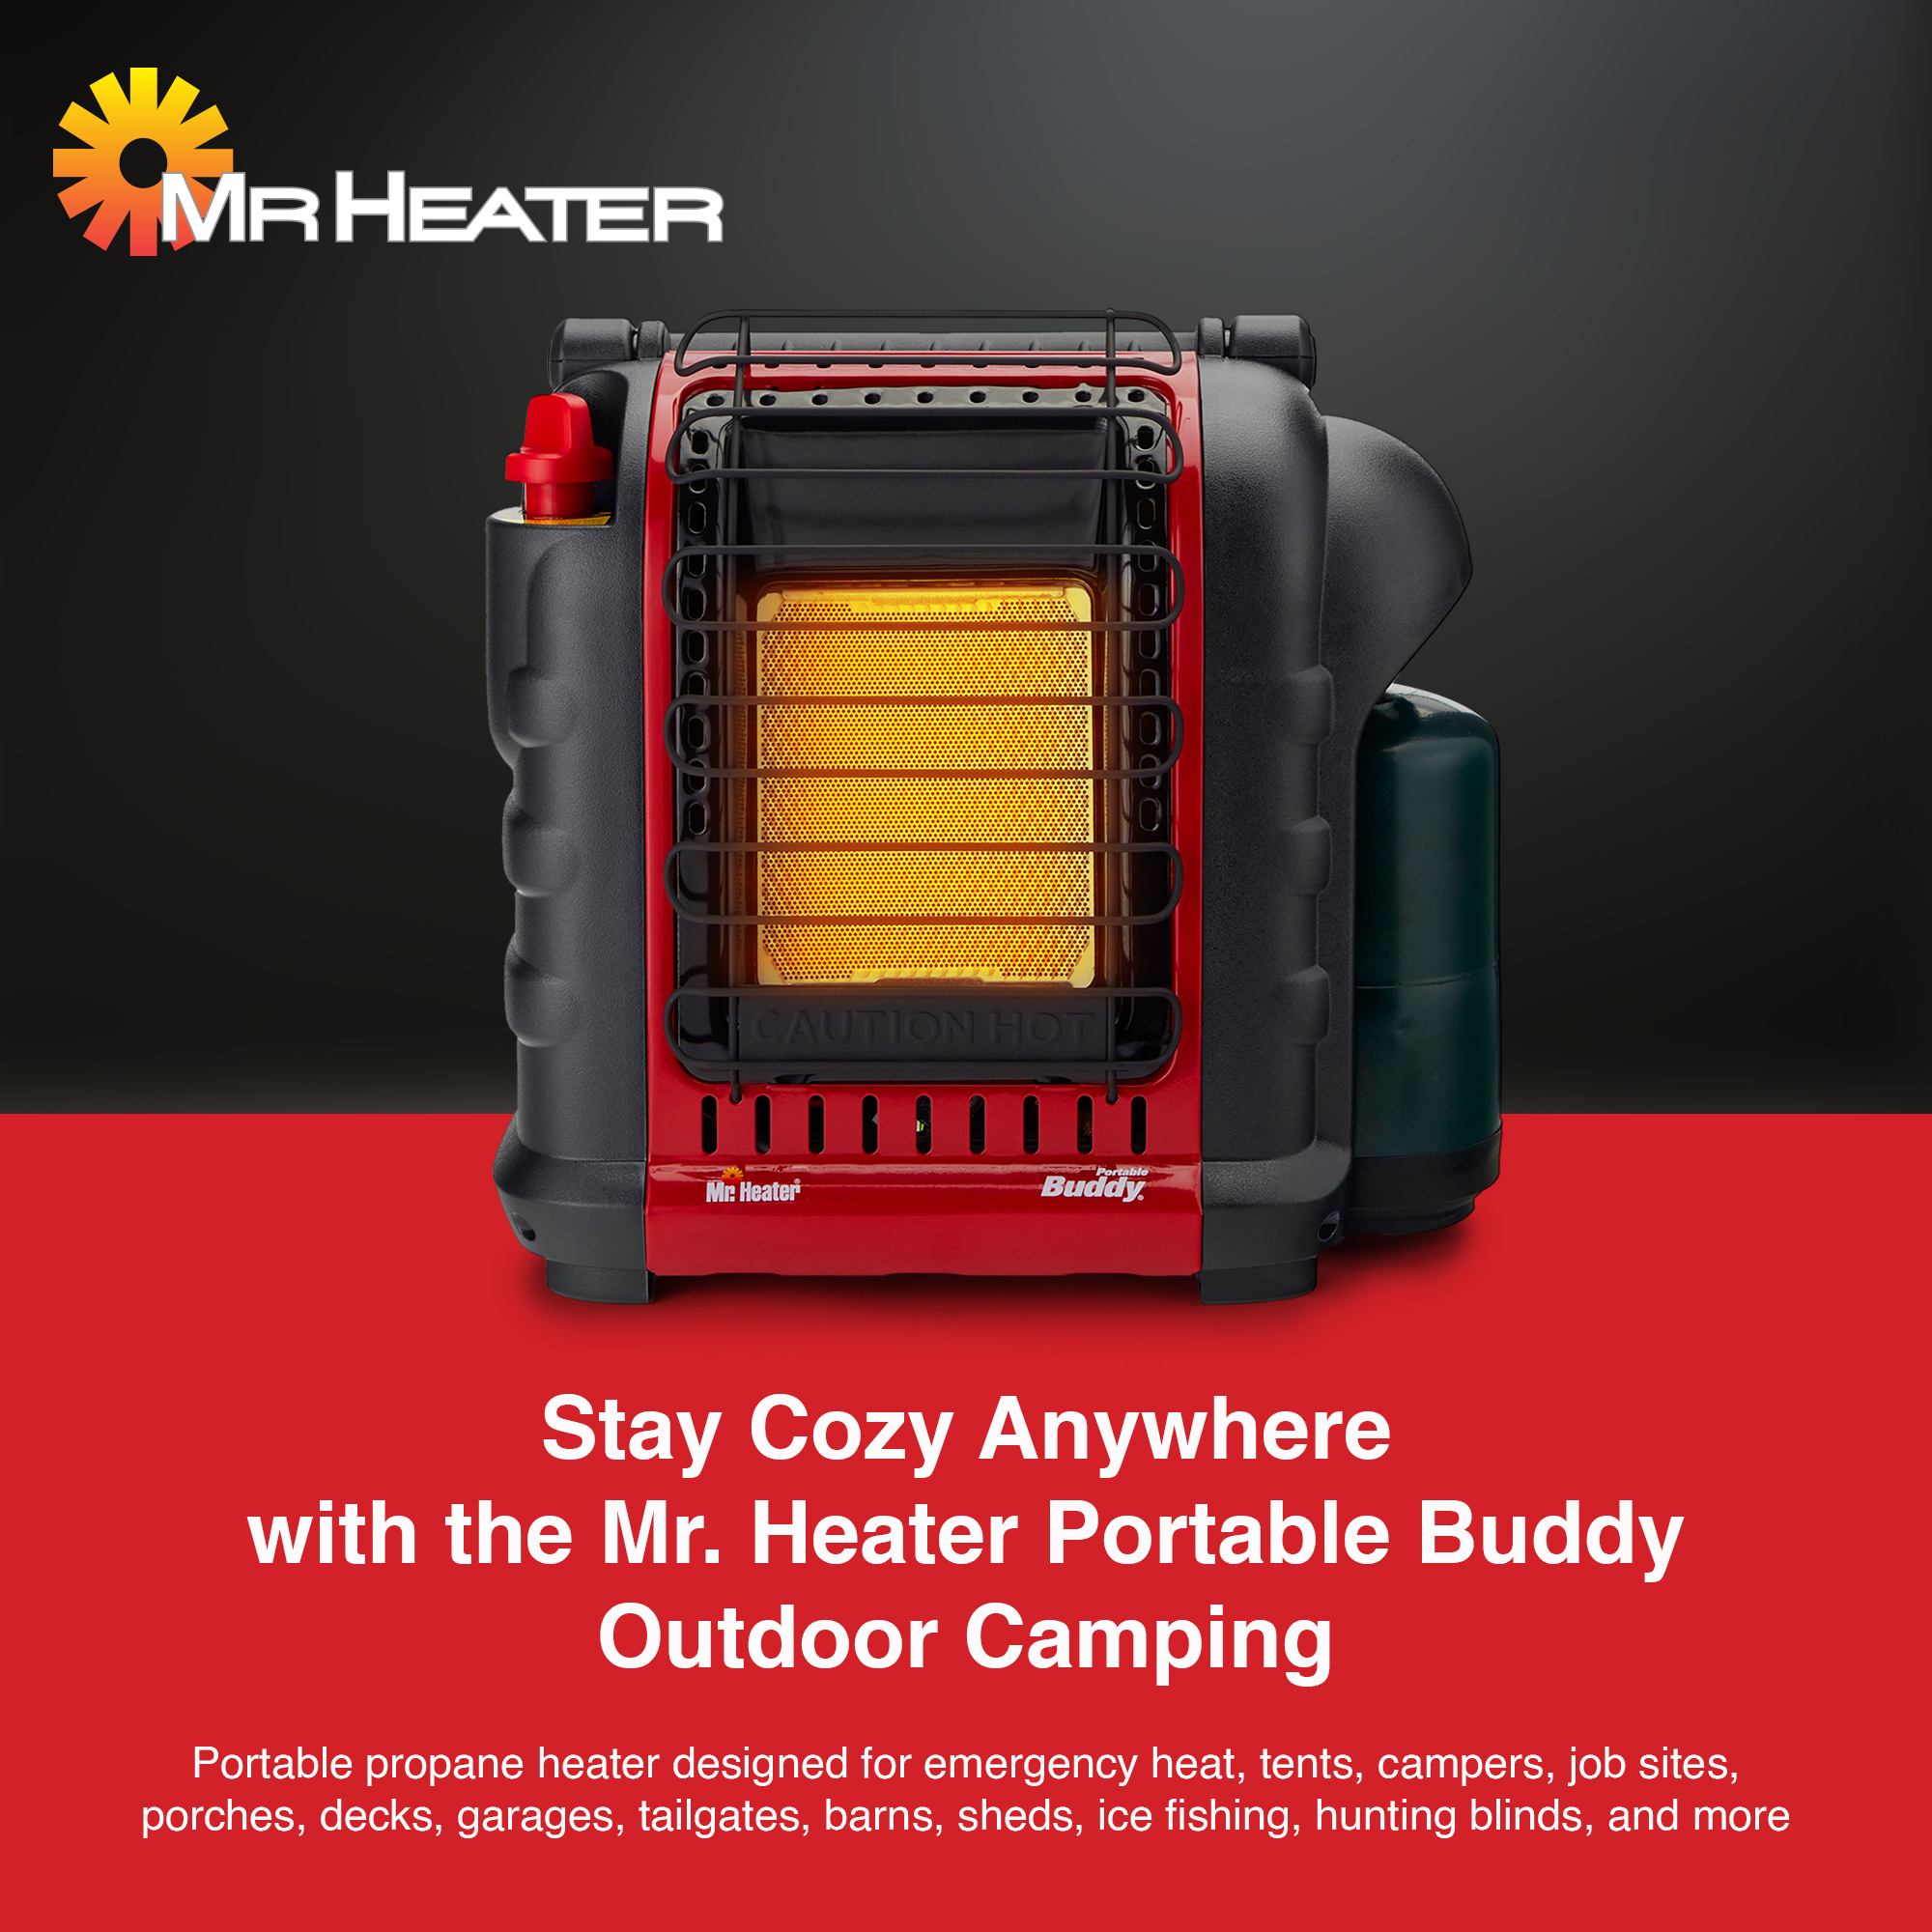 Mr. Heater Brand Portable Buddy 9,000 BTU Outdoor Camping Liquid Propane Heater - image 6 of 9